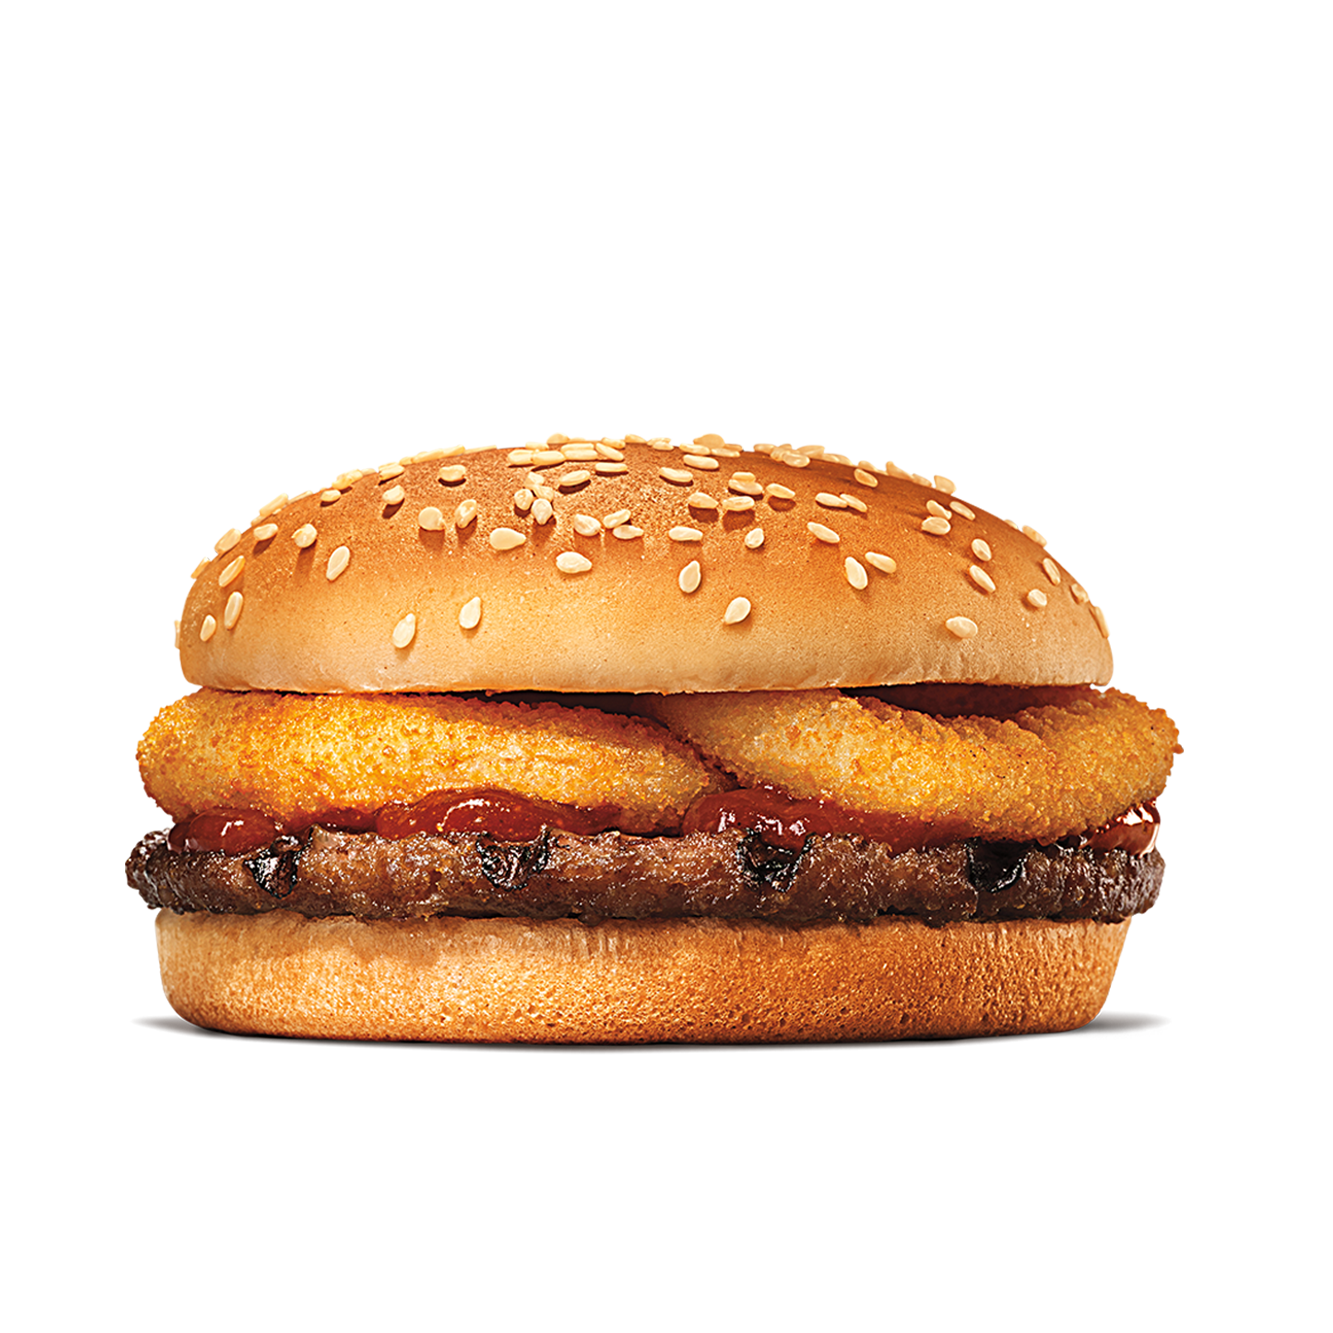 Burger King Ashburn (571)291-2942